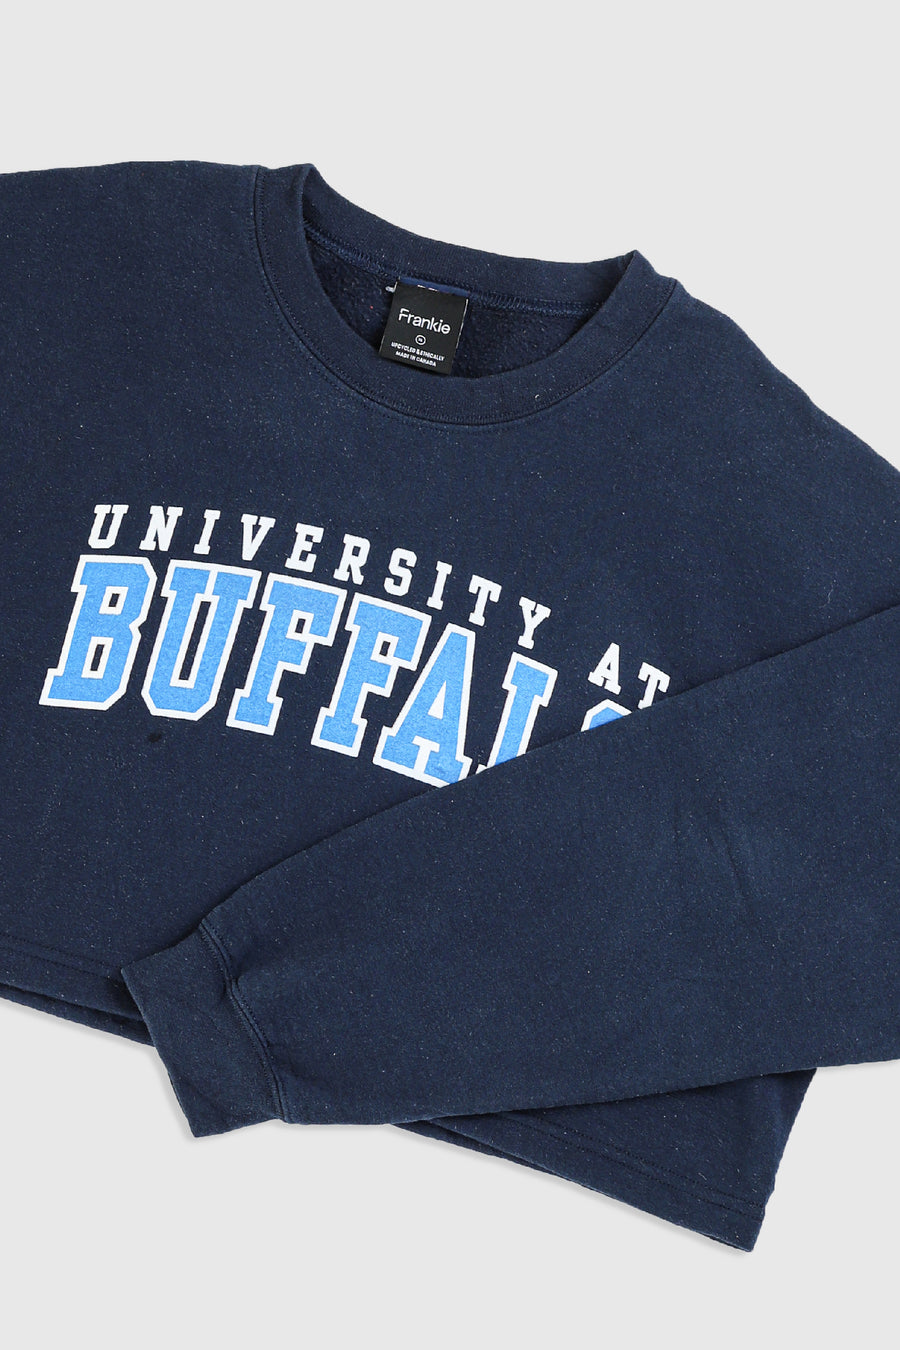 Rework Buffalo University Crop Sweatshirt - XL